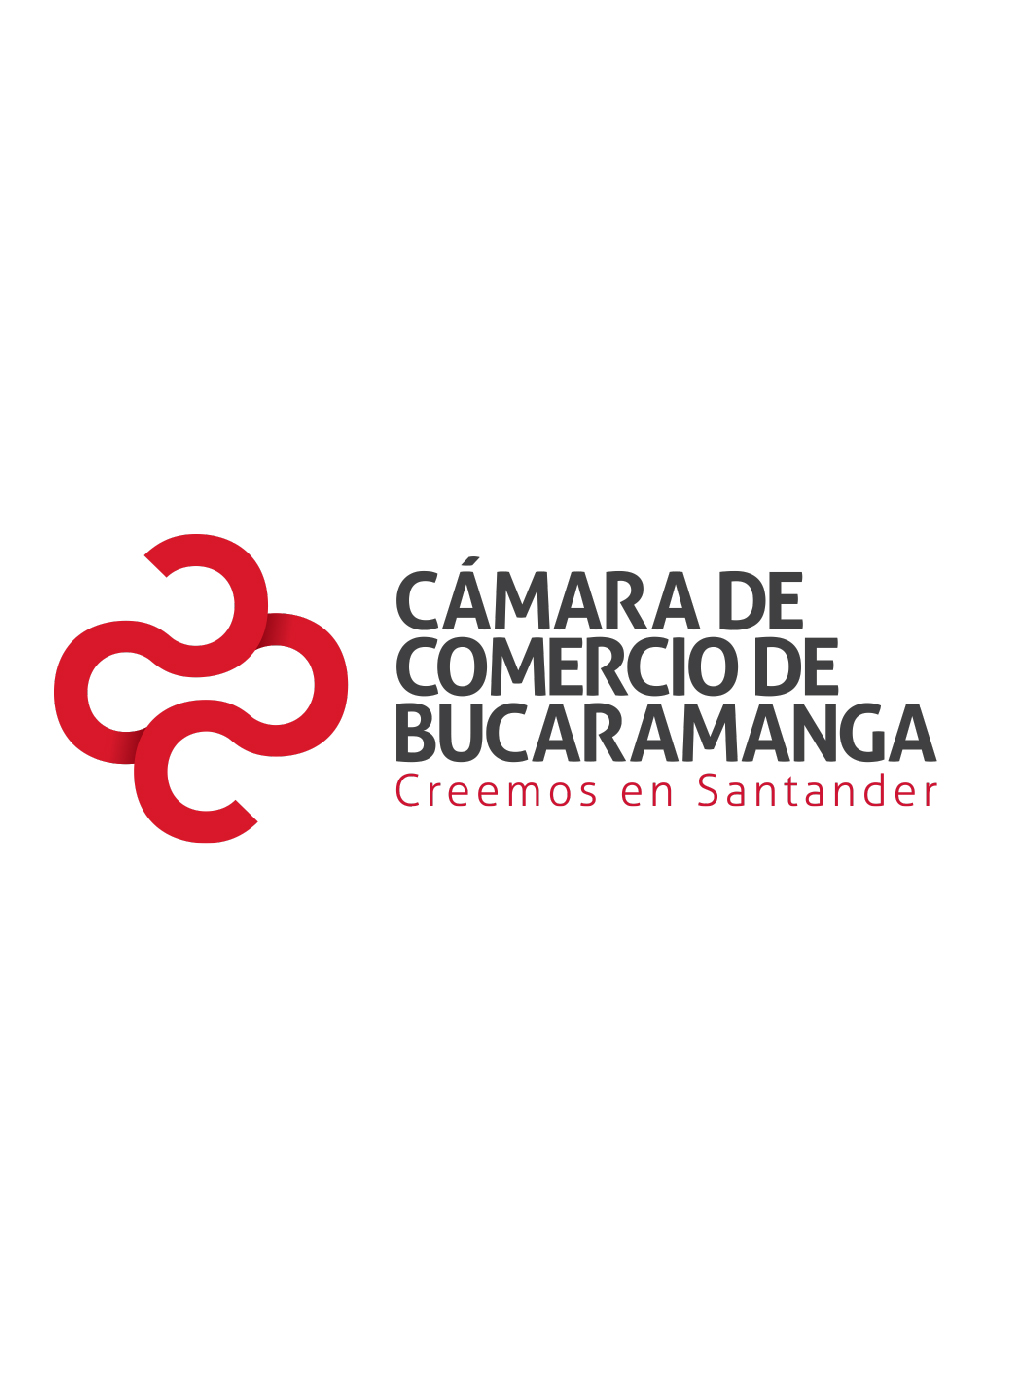 Sistema Financiero en Santander 2010 - I trimestre